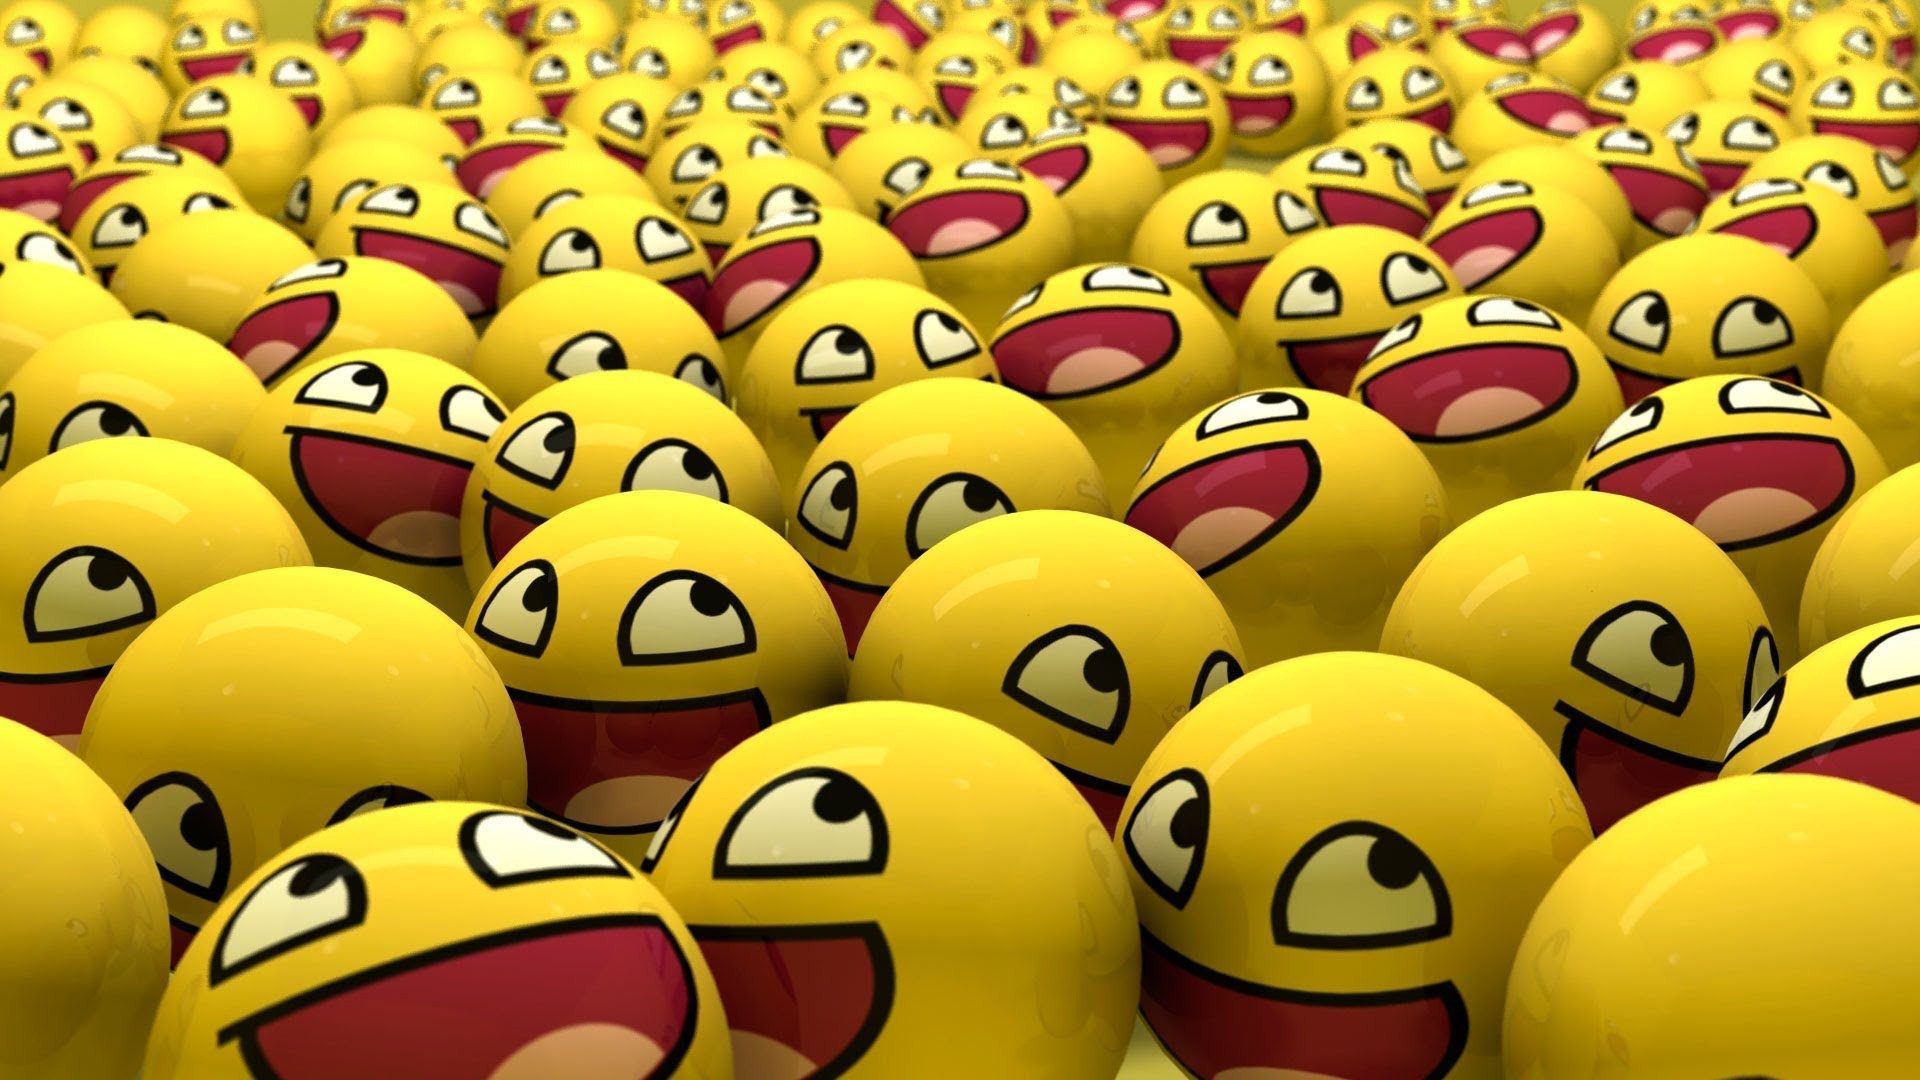 Smiling Faces Funny Wallpaper For Desktop Of Smiley